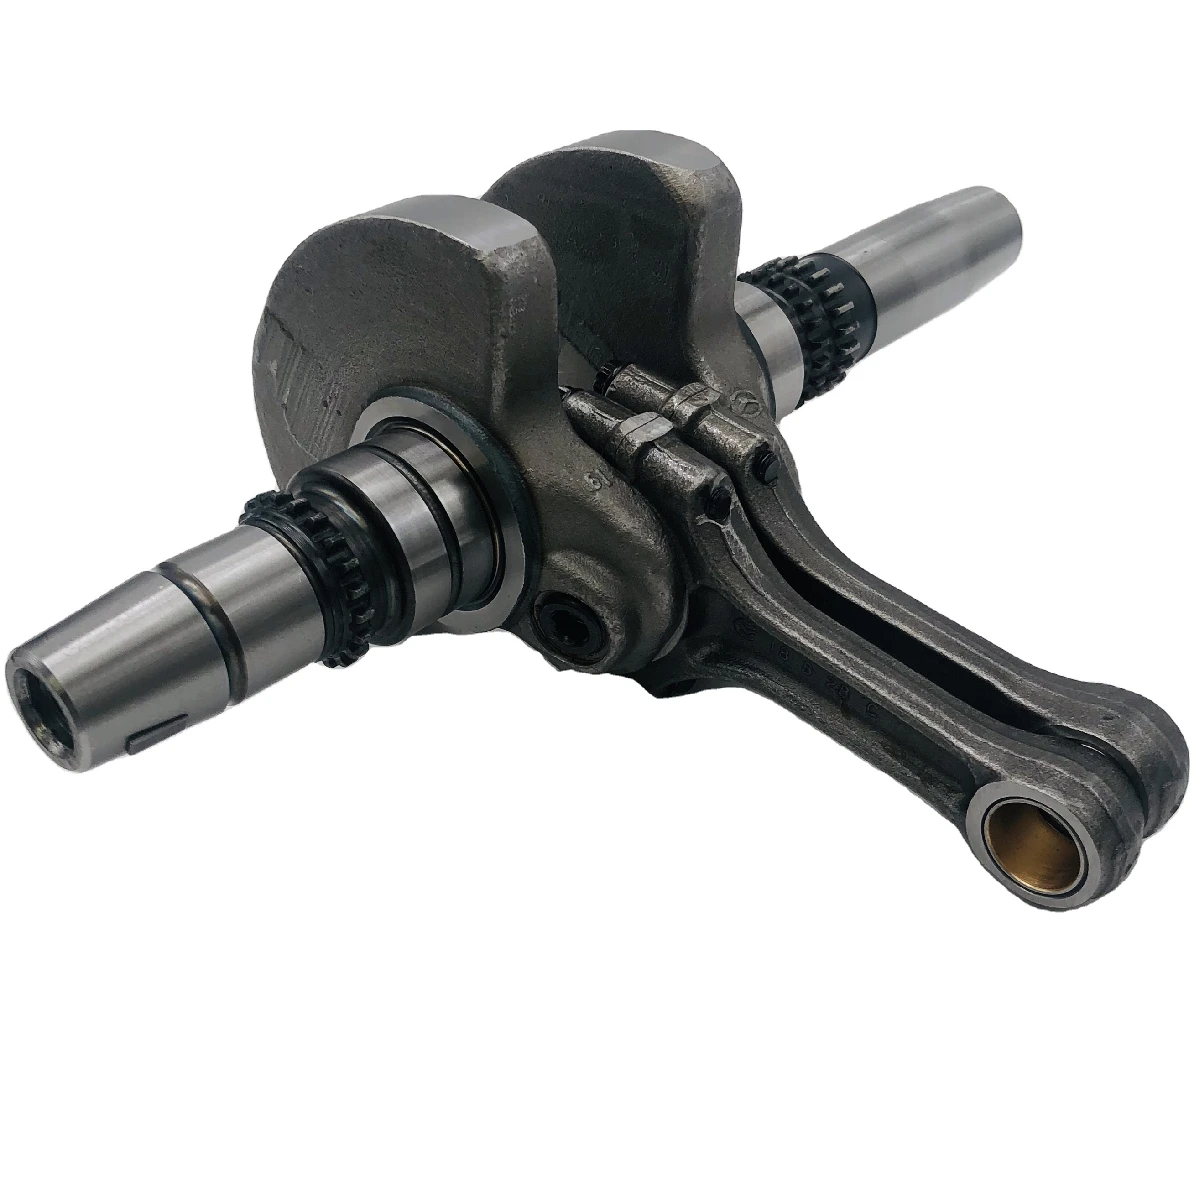 Crankshaft assy with Connecting Rod for Stels 650 800 Guepard 800 ATV Quad GaoKin 800 100500-800-0070 LU072400 13200-E05-0000